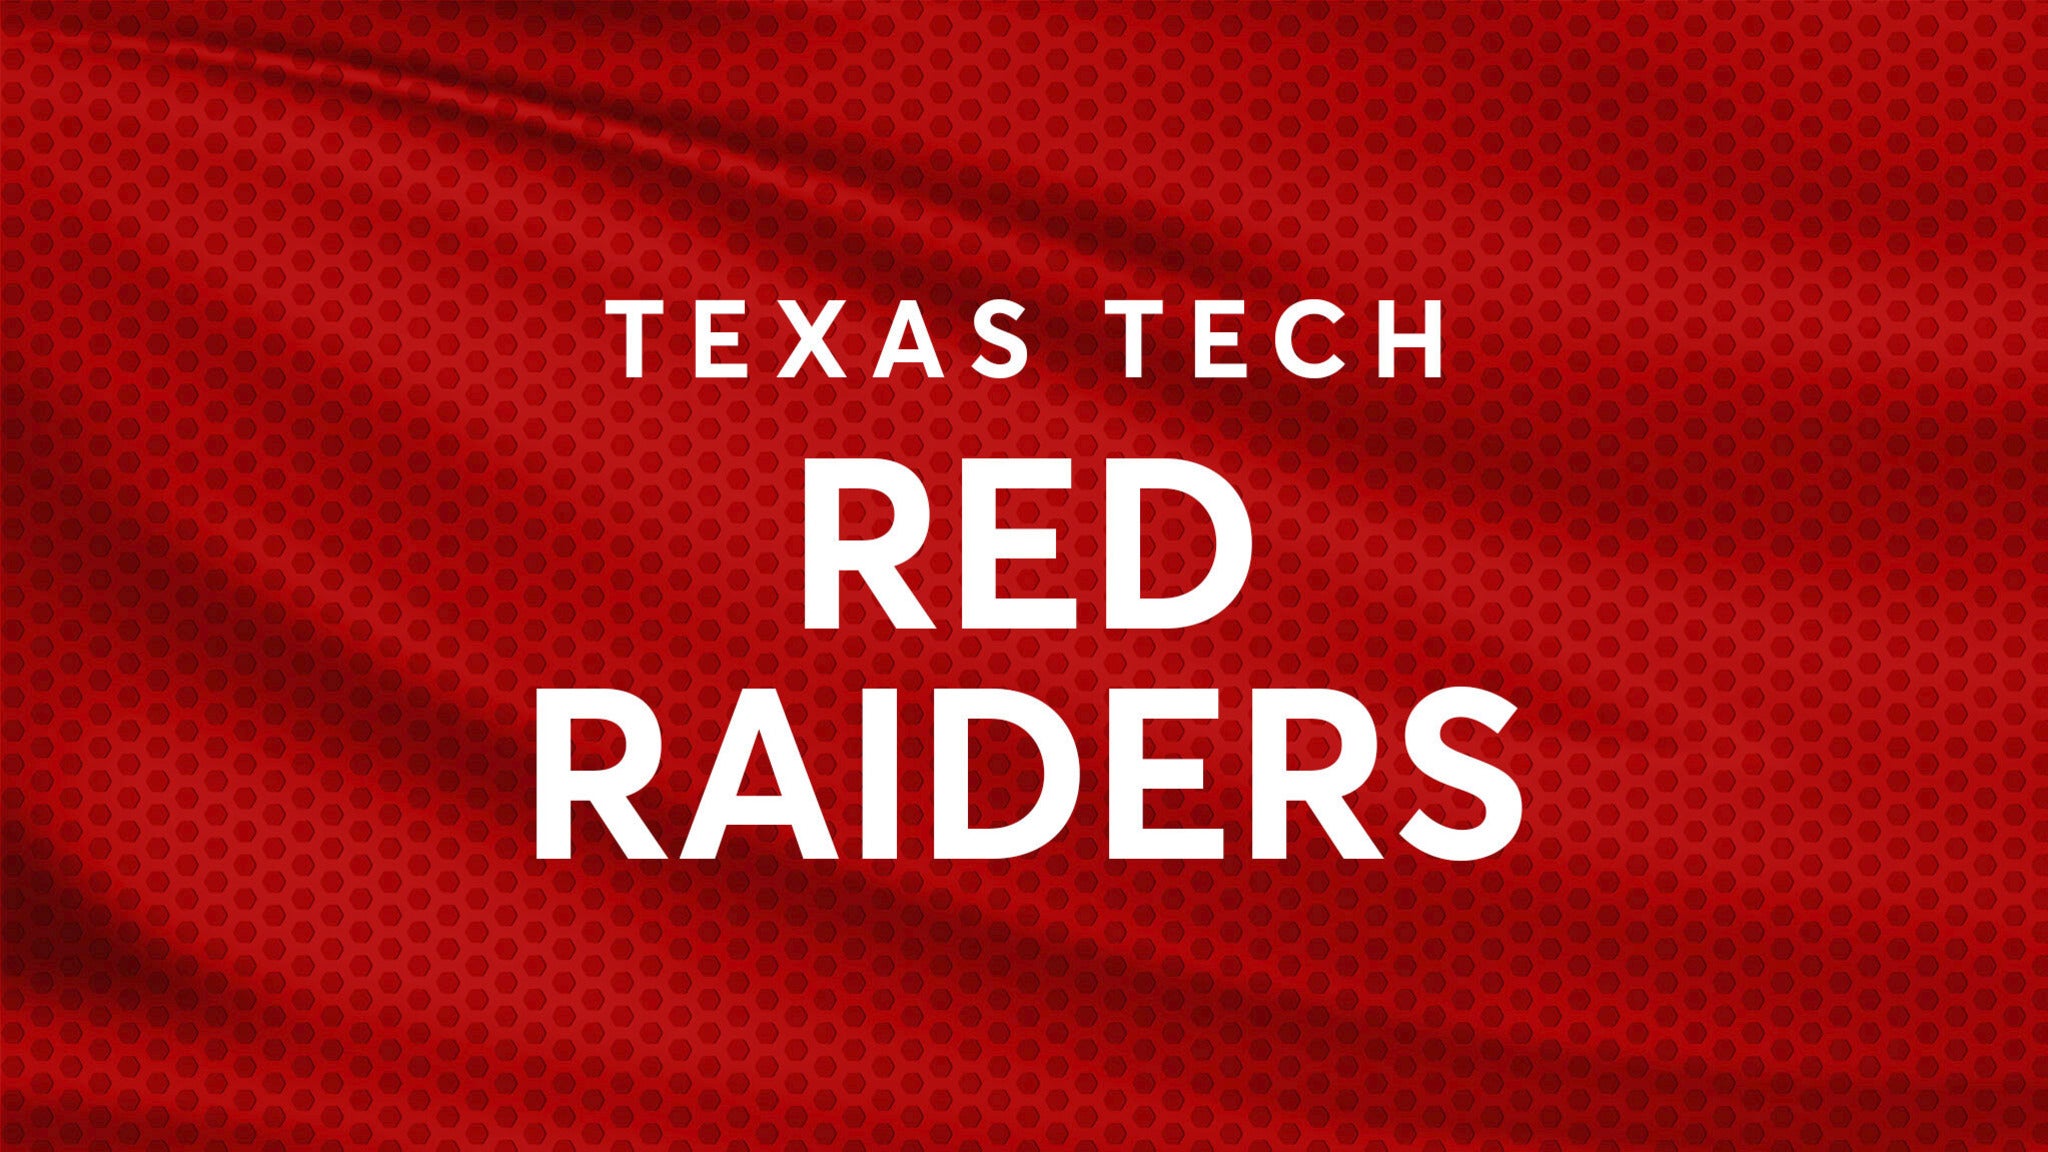 Texas Tech Red Raiders Womens Soccer presale information on freepresalepasswords.com